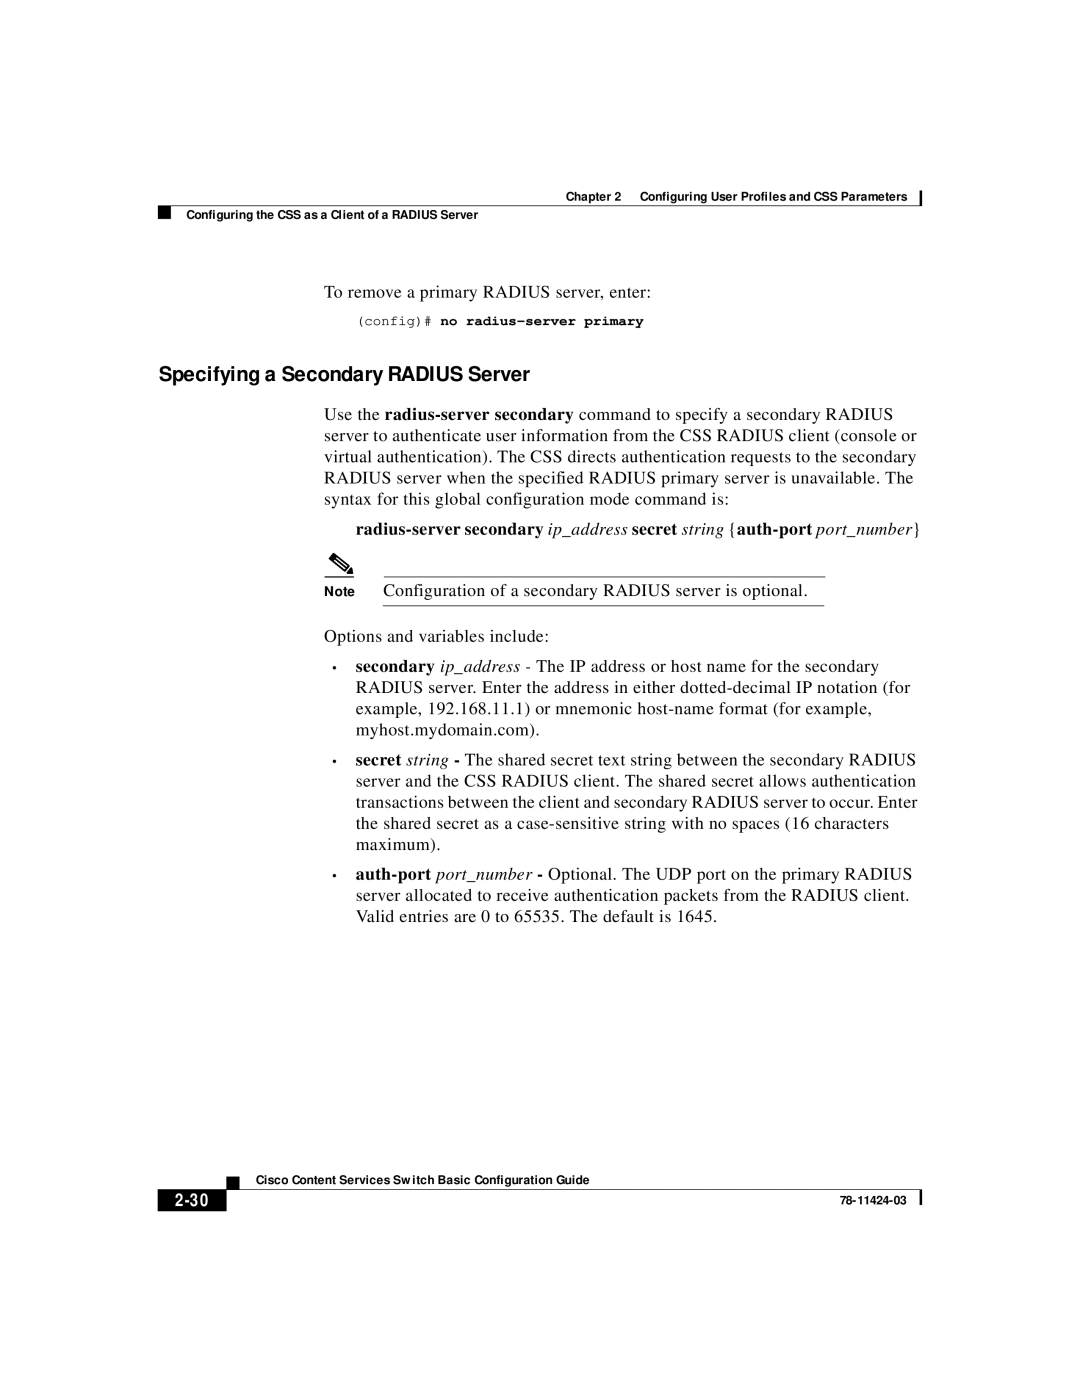 Cisco Systems 78-11424-03 manual Specifying a Secondary RADIUS Server, 2-30 